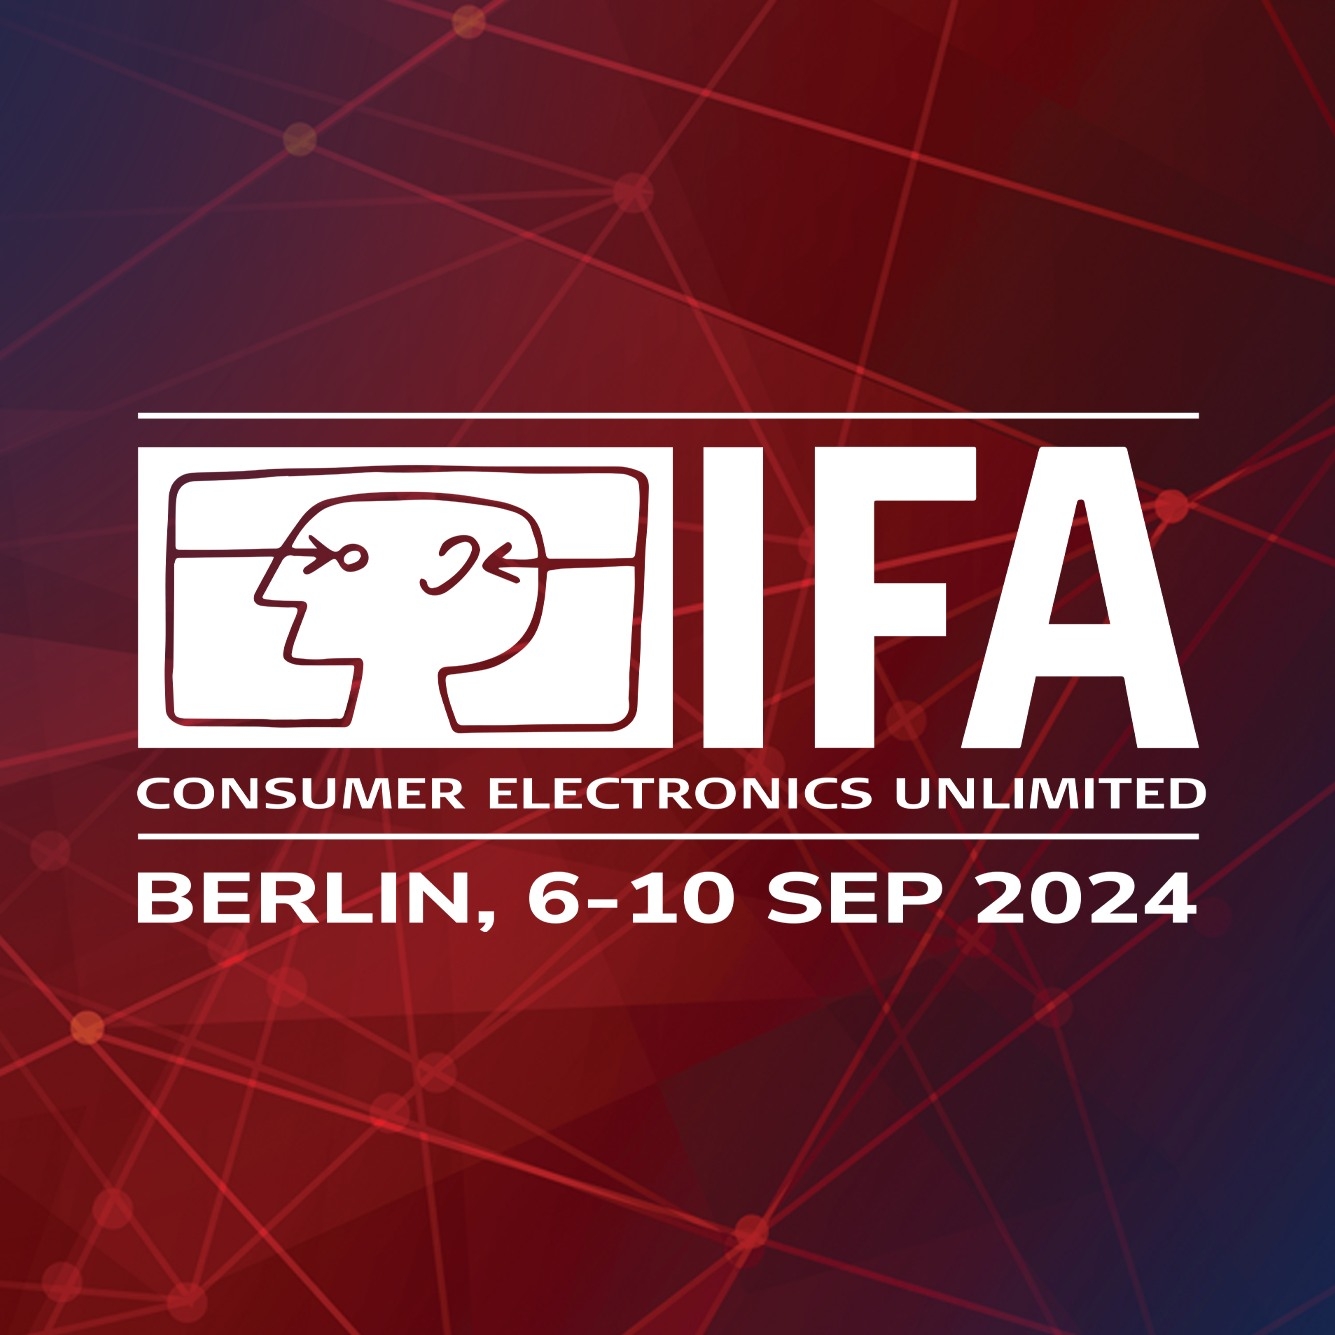 IFA Berlin event